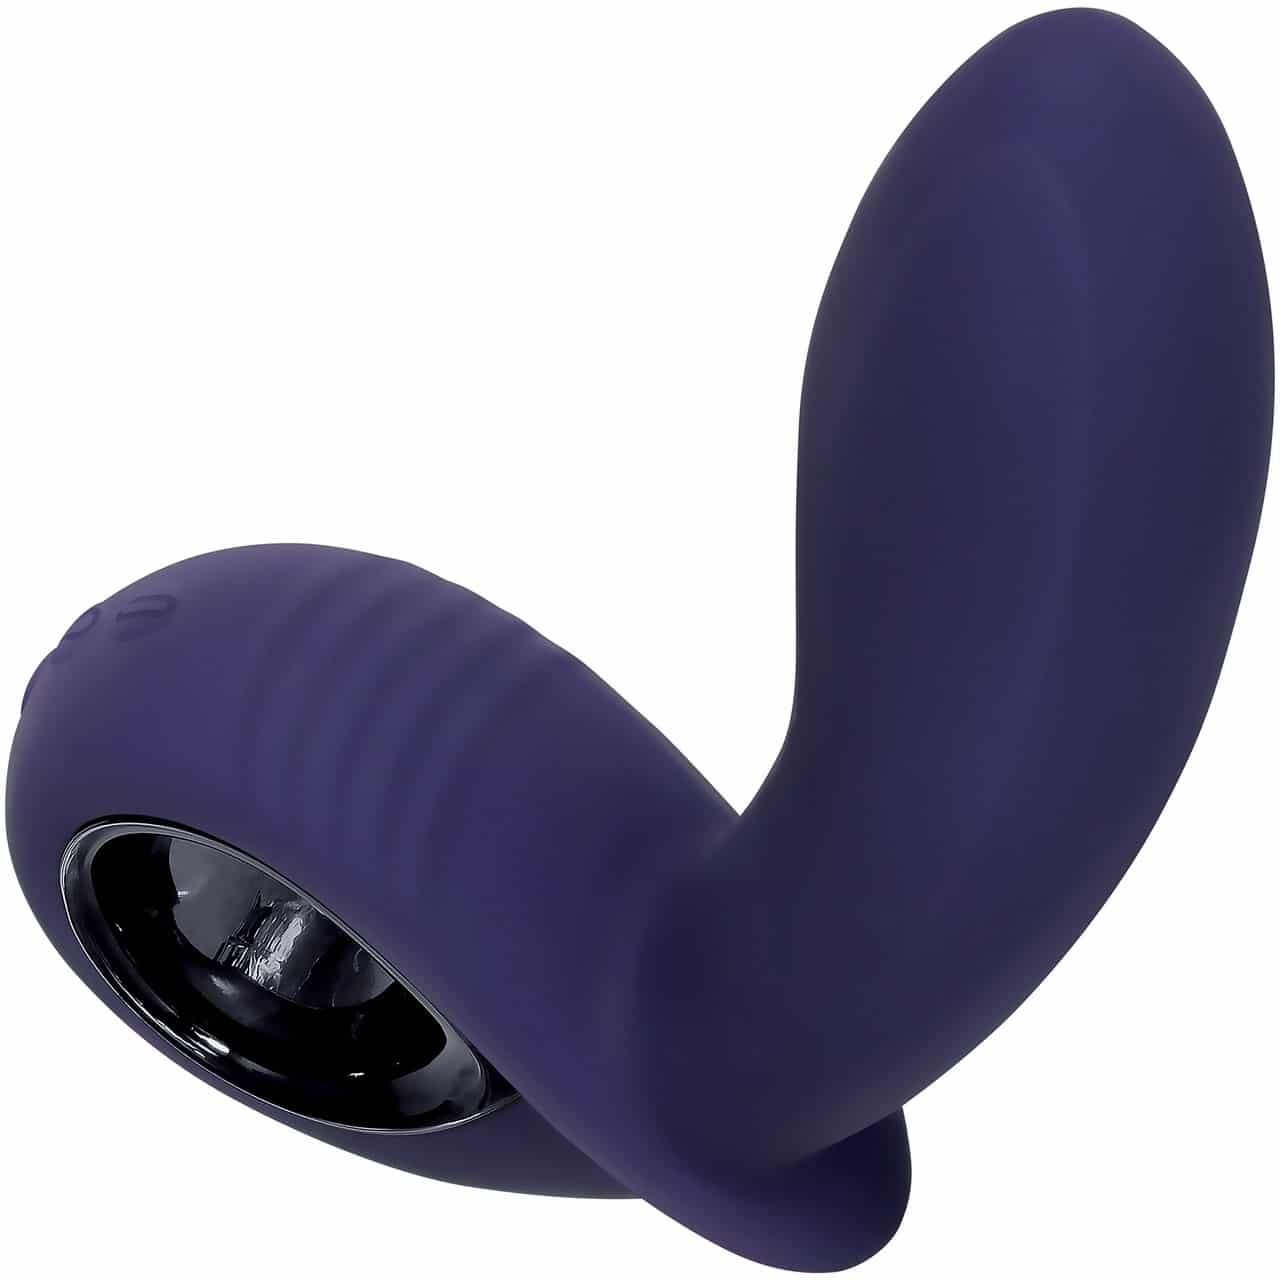 Inflatable Silicone G-Spot Vibrator By Evolved Novelties. Slide 2